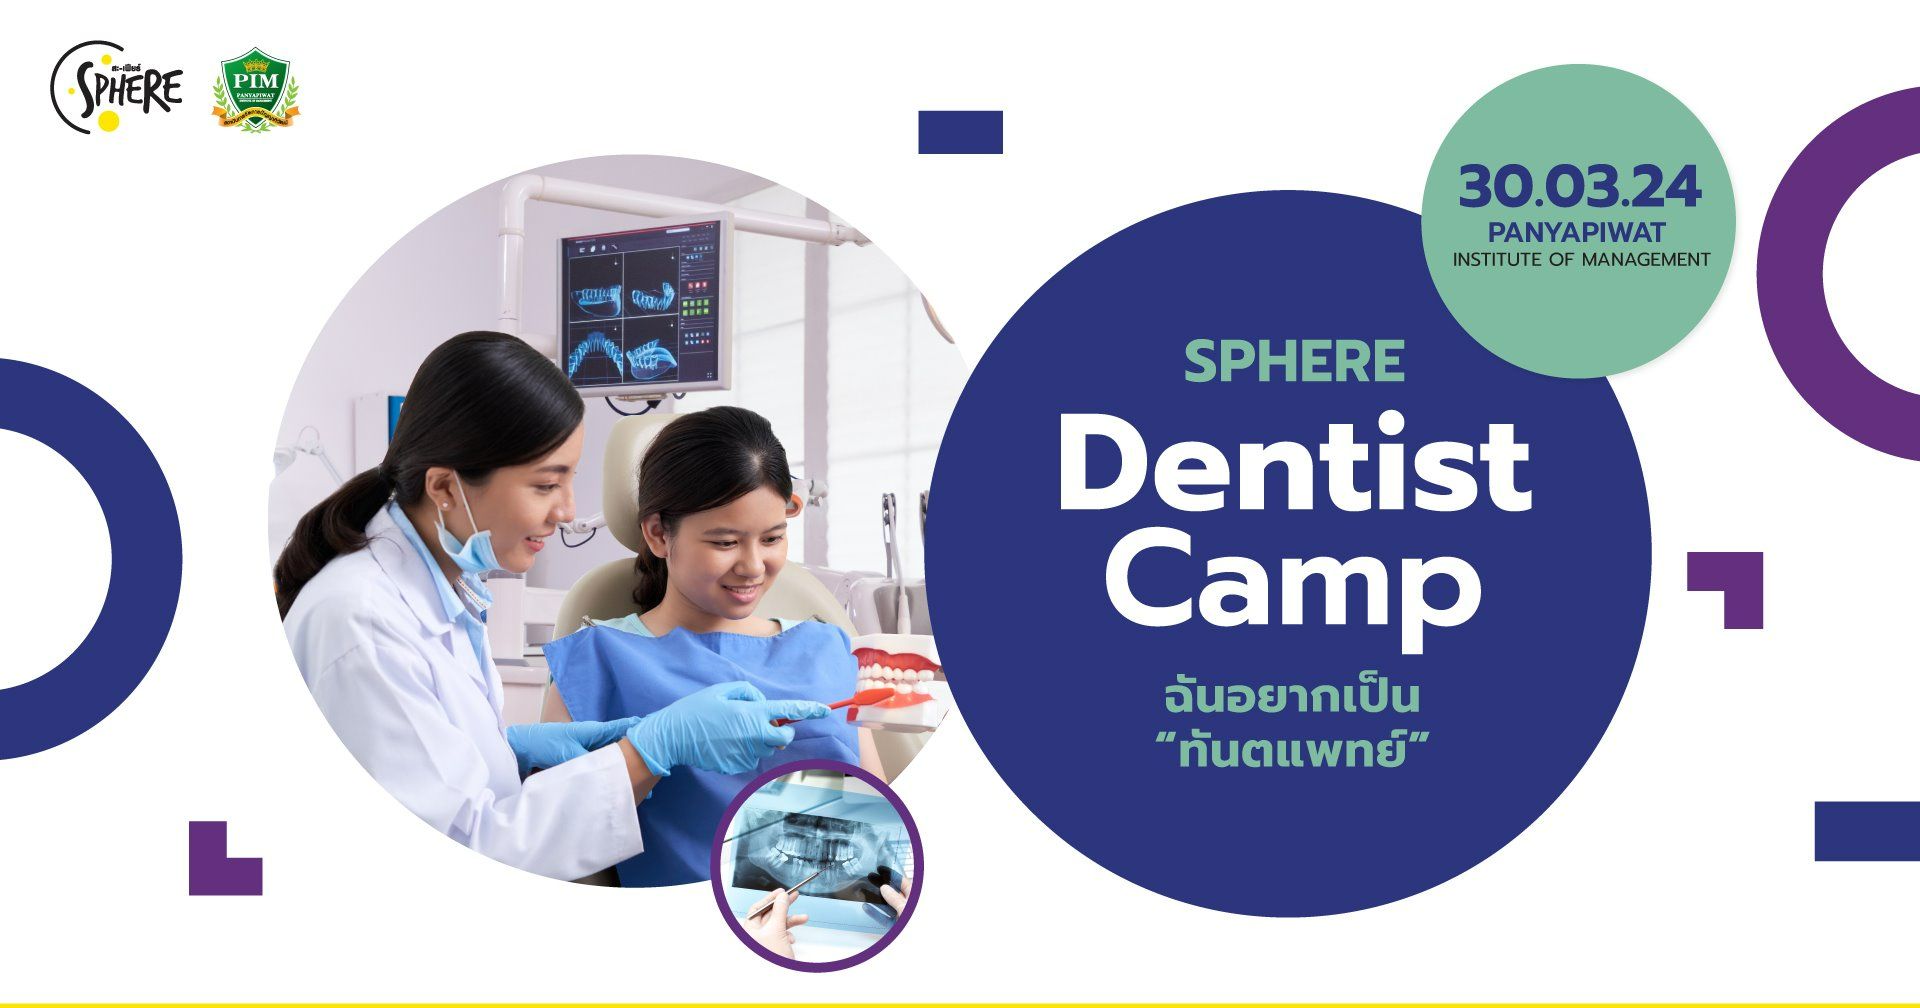 Sphere Dentist Camp ฉันอยากเป็น ทันตแพทย์